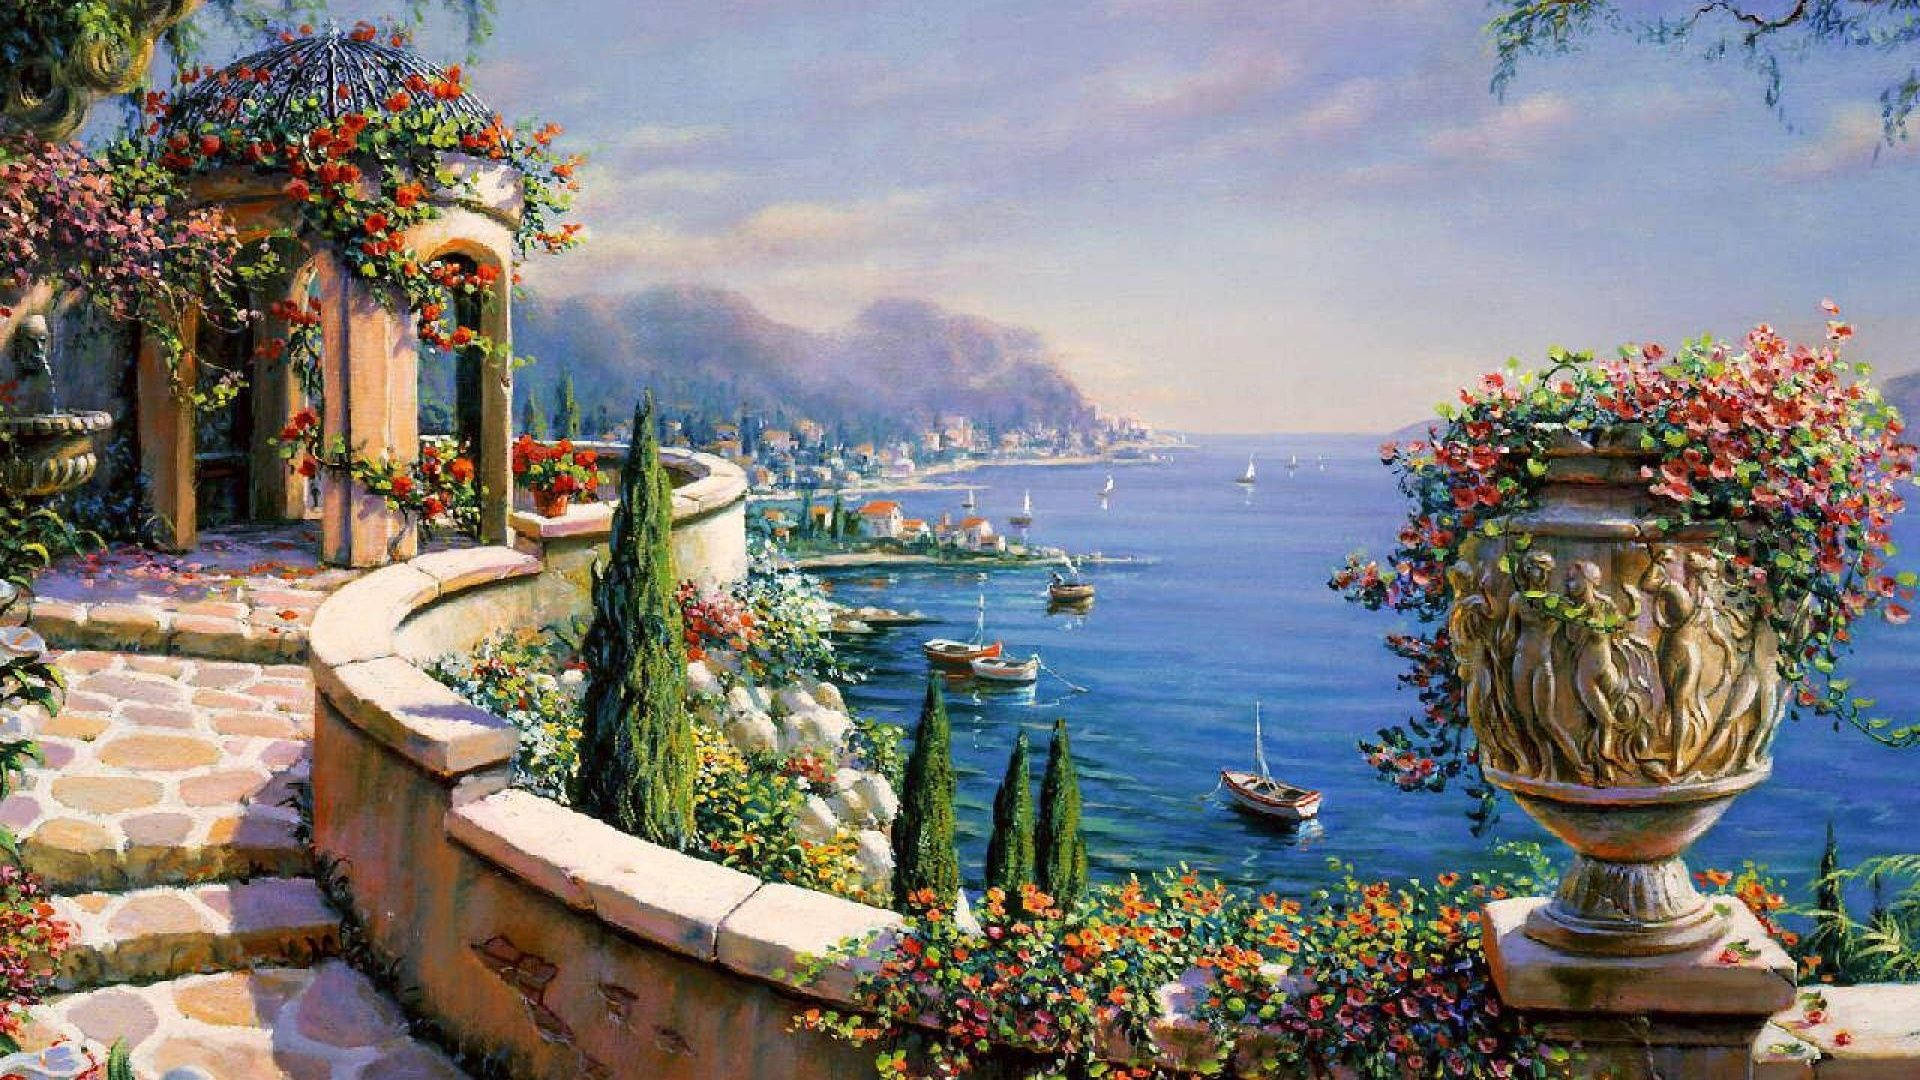 Capri Italy Landscape Painting Wallpaper